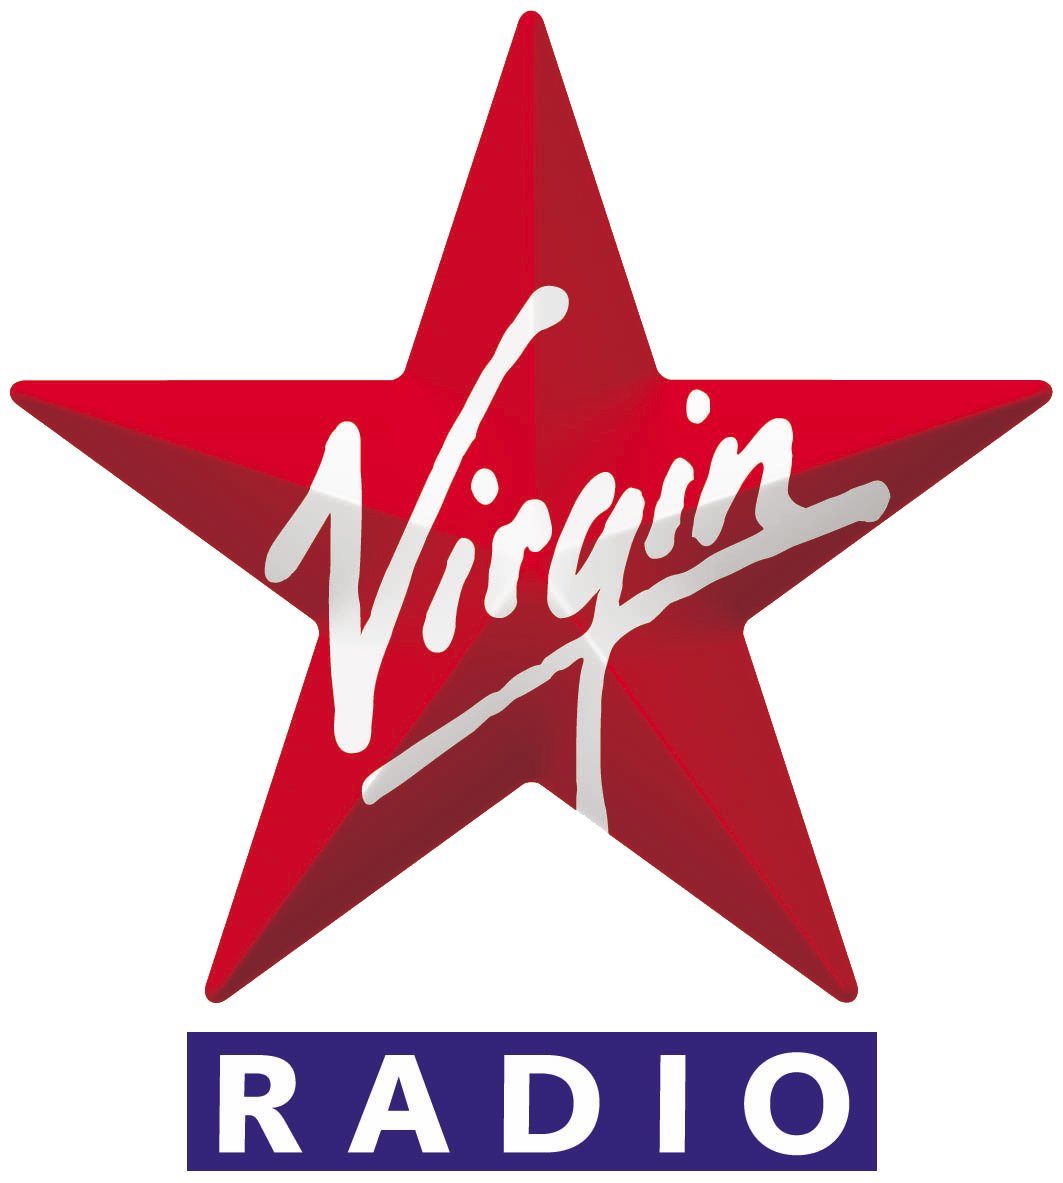 Virgin Radio : 2,2 millions d'auditeurs